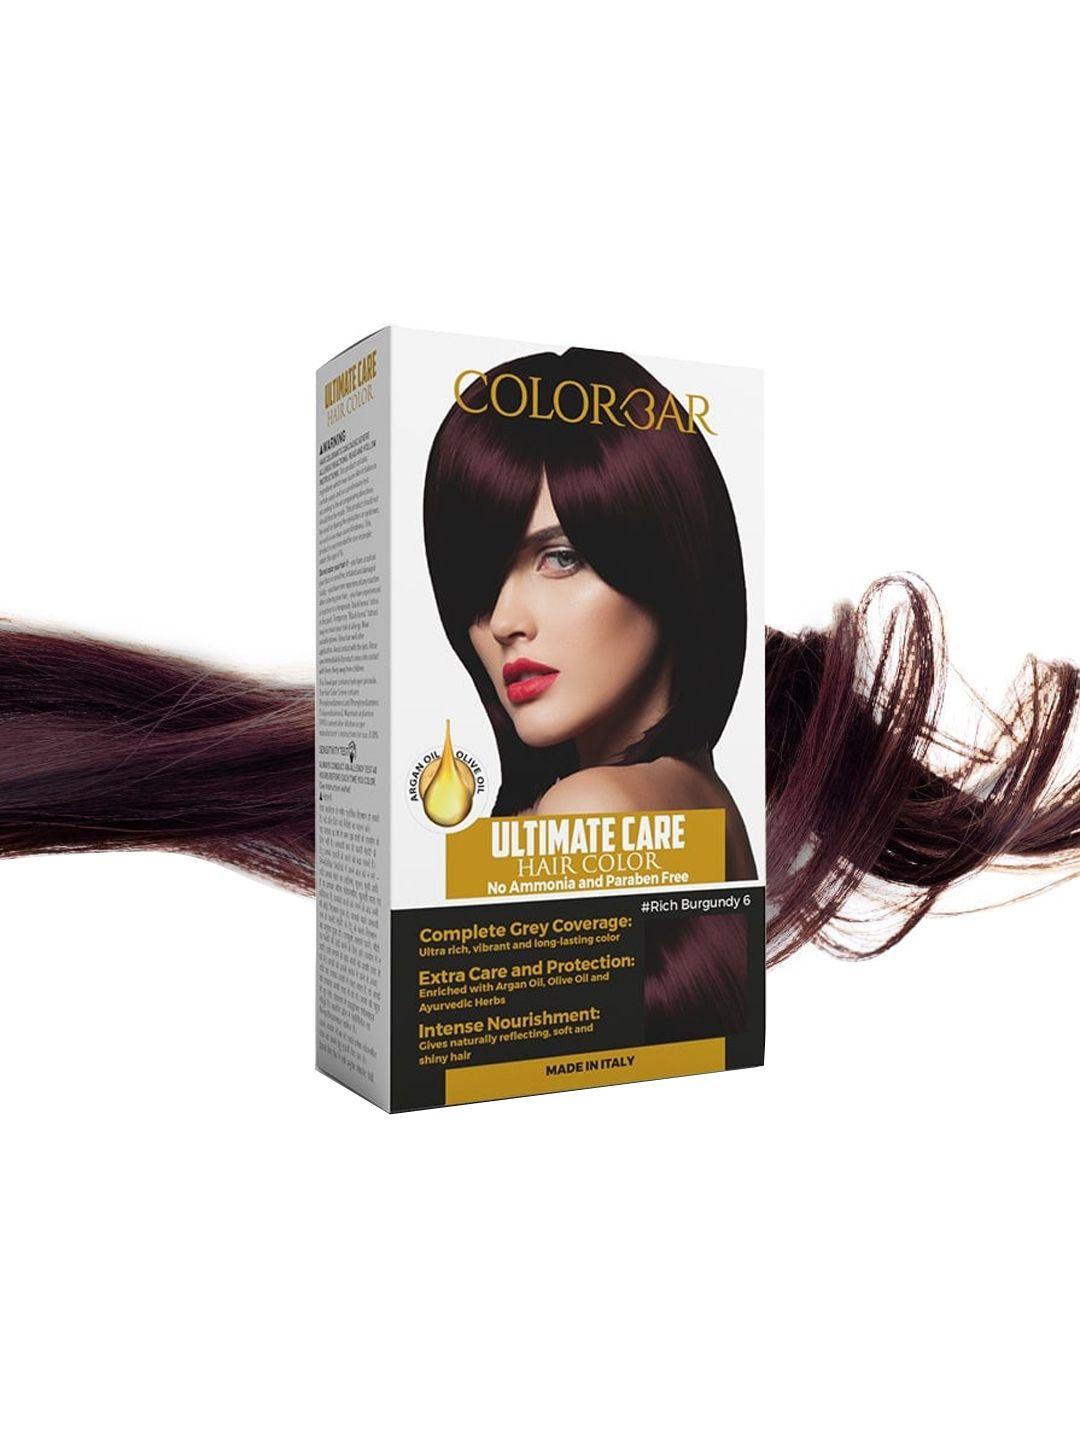 colorbar-hair-color-rich-burgundy--6-145-ml